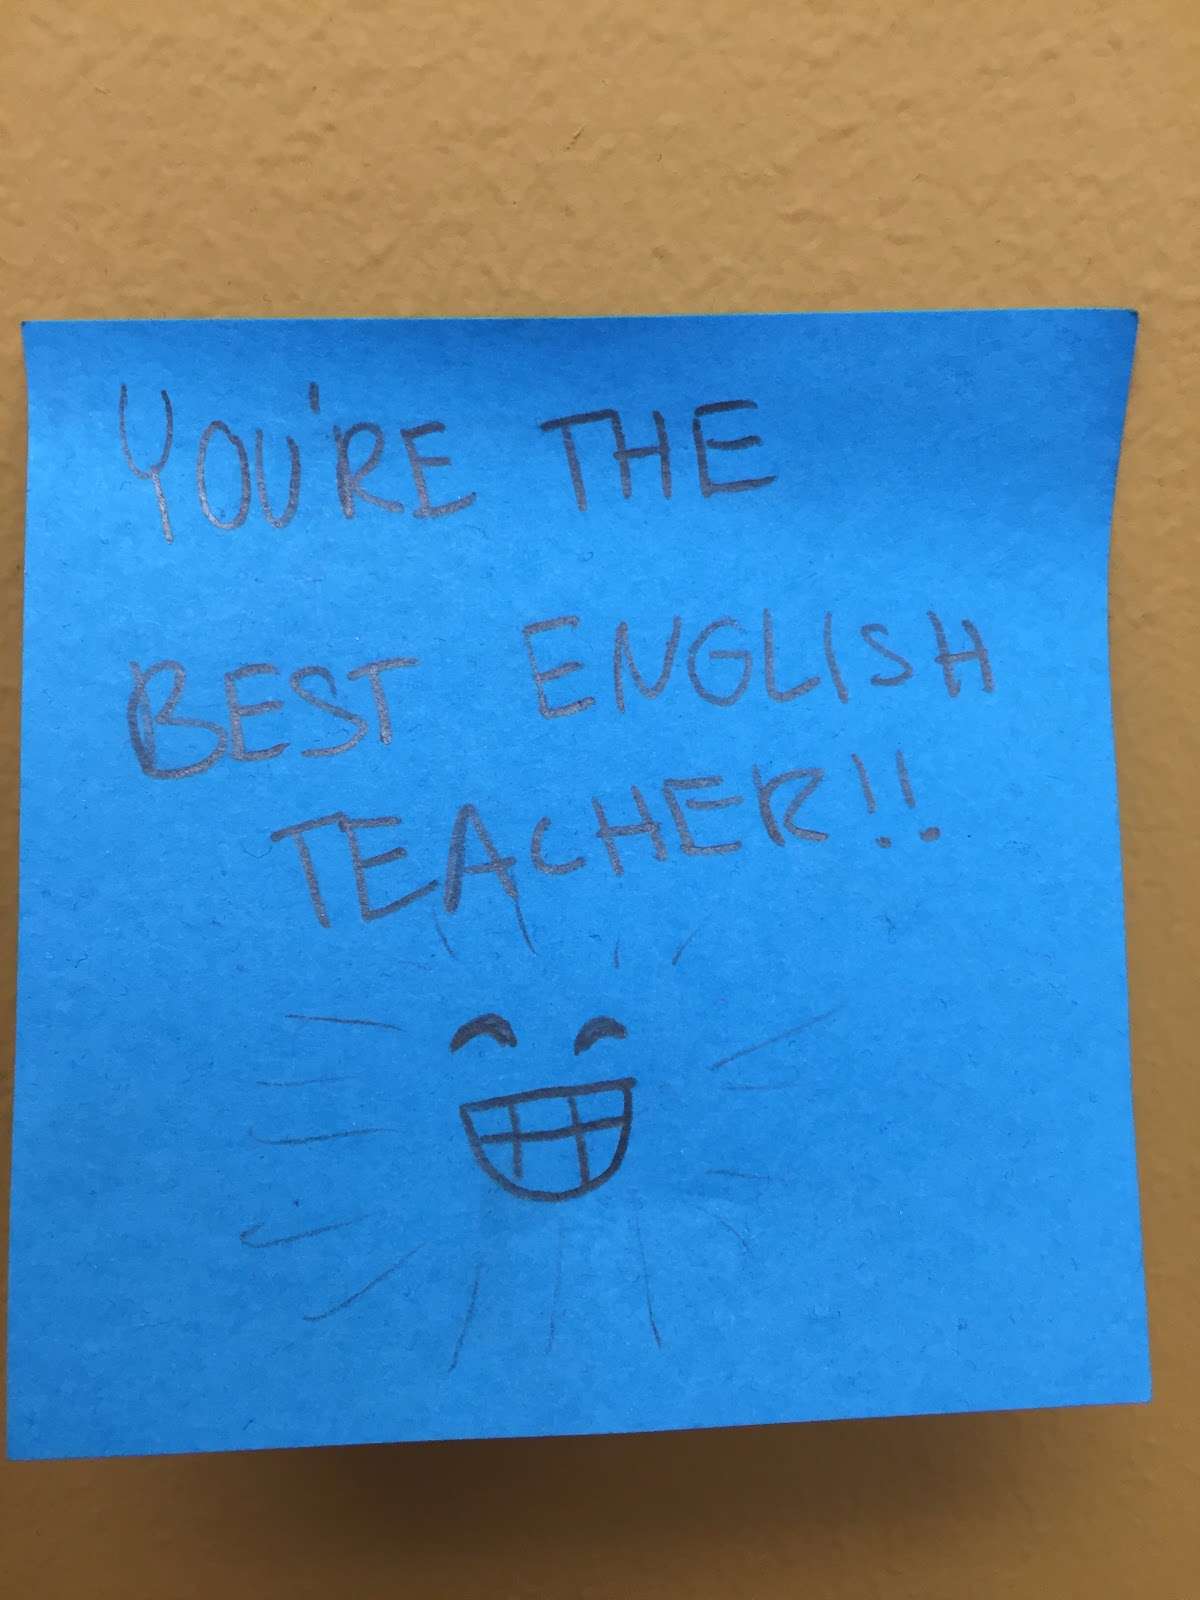 student appreciation is a huge reward for teachers